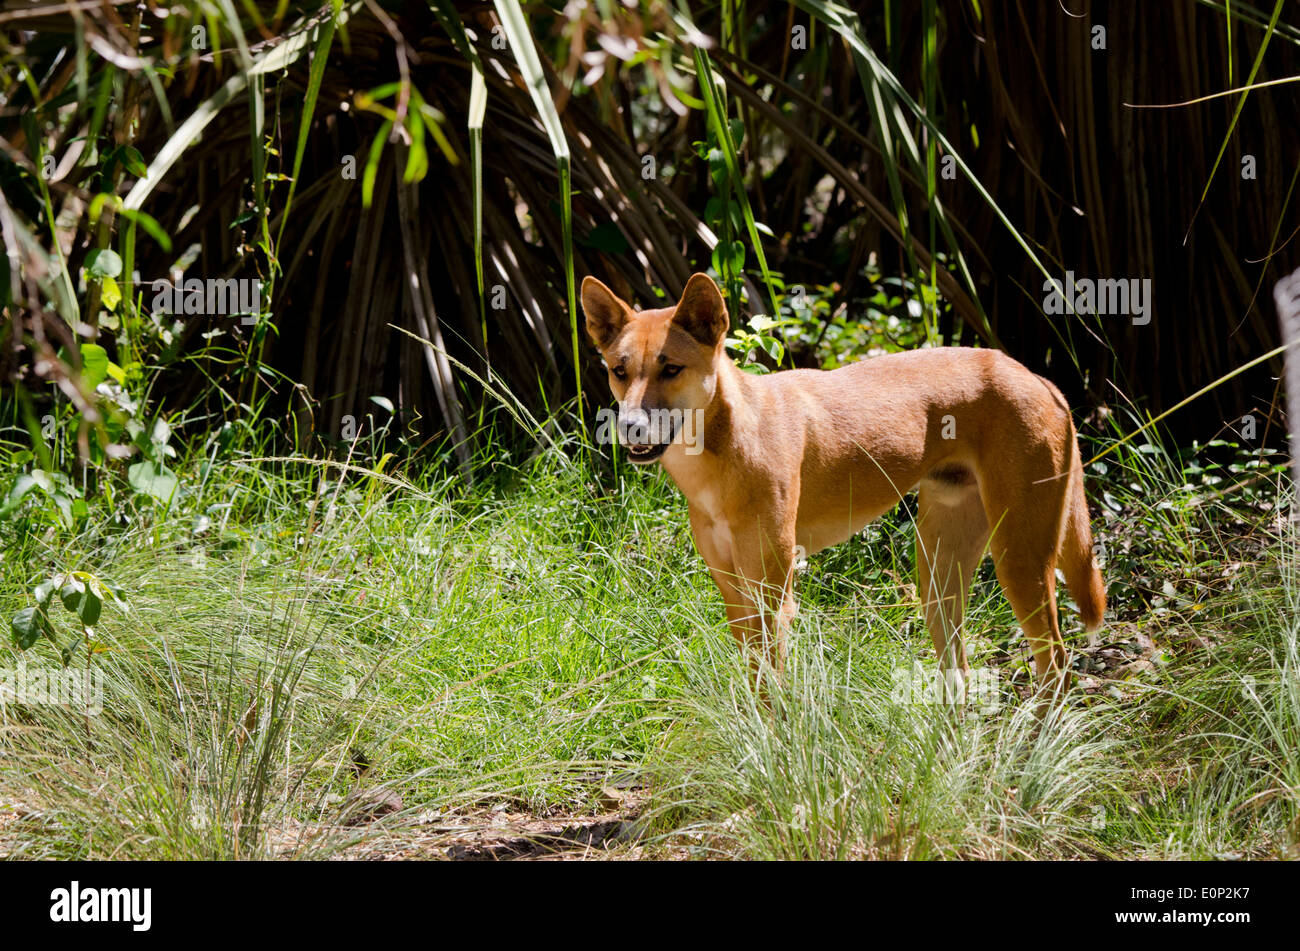 Australia, Northern Territory, Darwin. Territory Wildlife Park. Dingo (Captive: Canis lupus dingo) wild Australian dog. Stock Photo